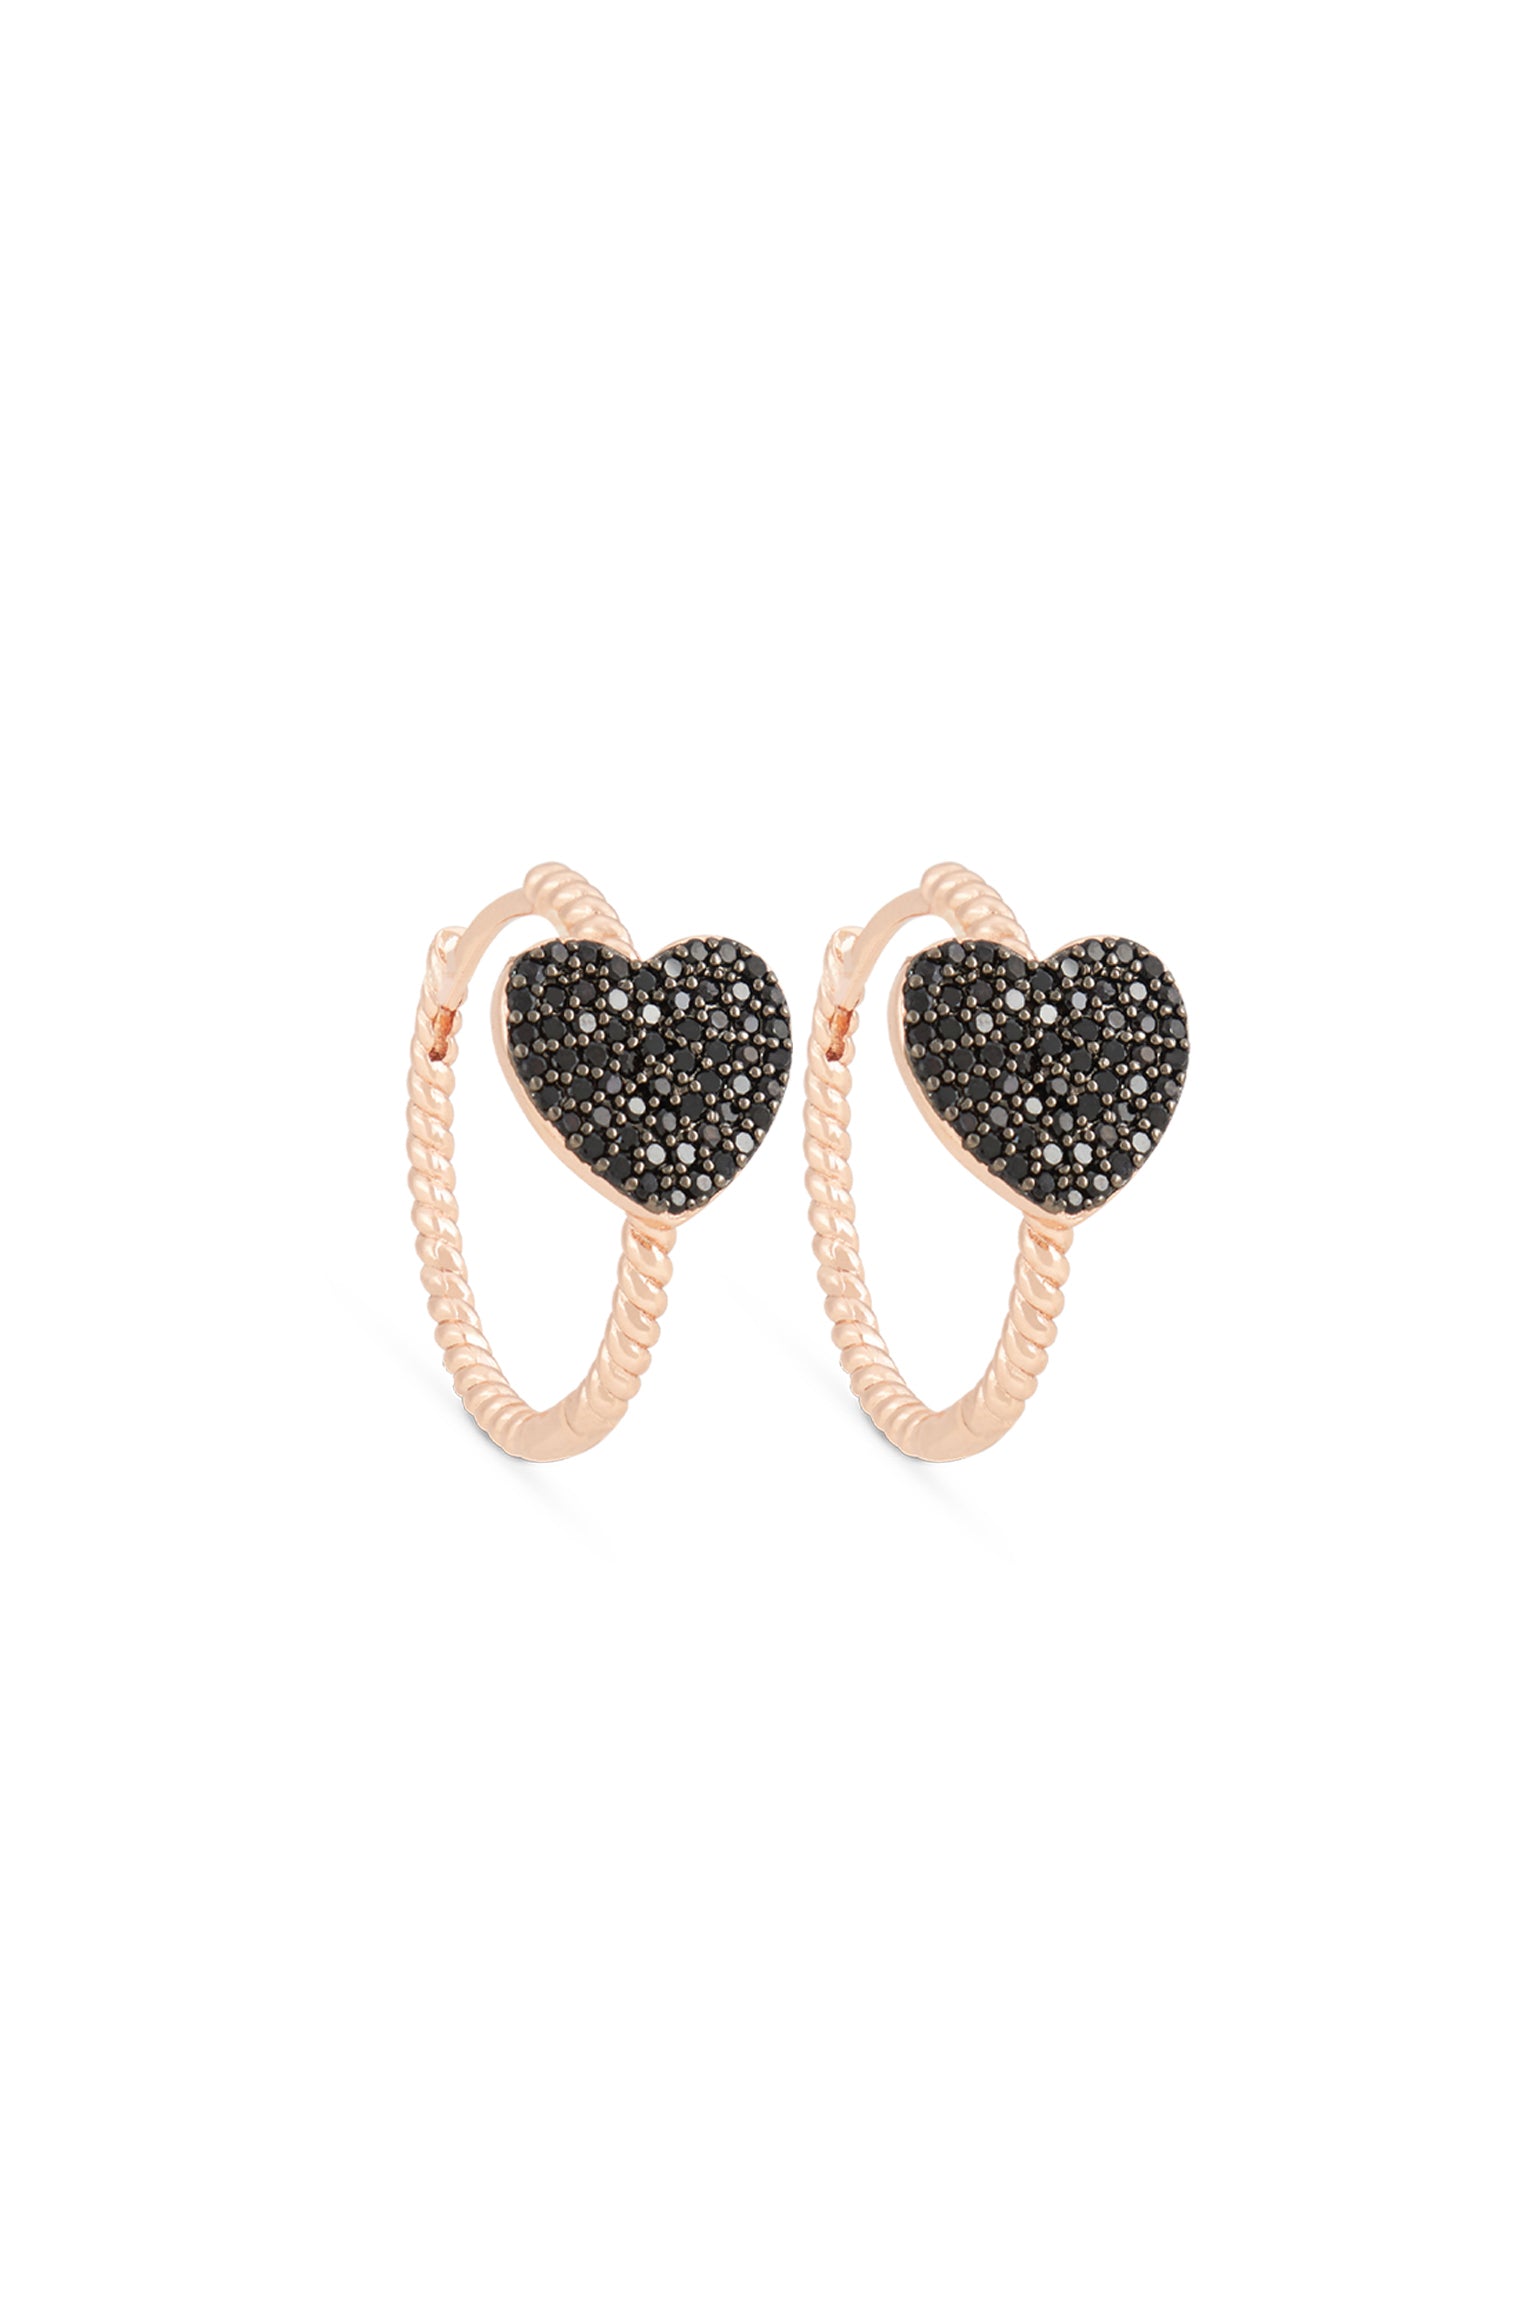 MELUSINA BIJOUX Circle Earrings with Black Heart